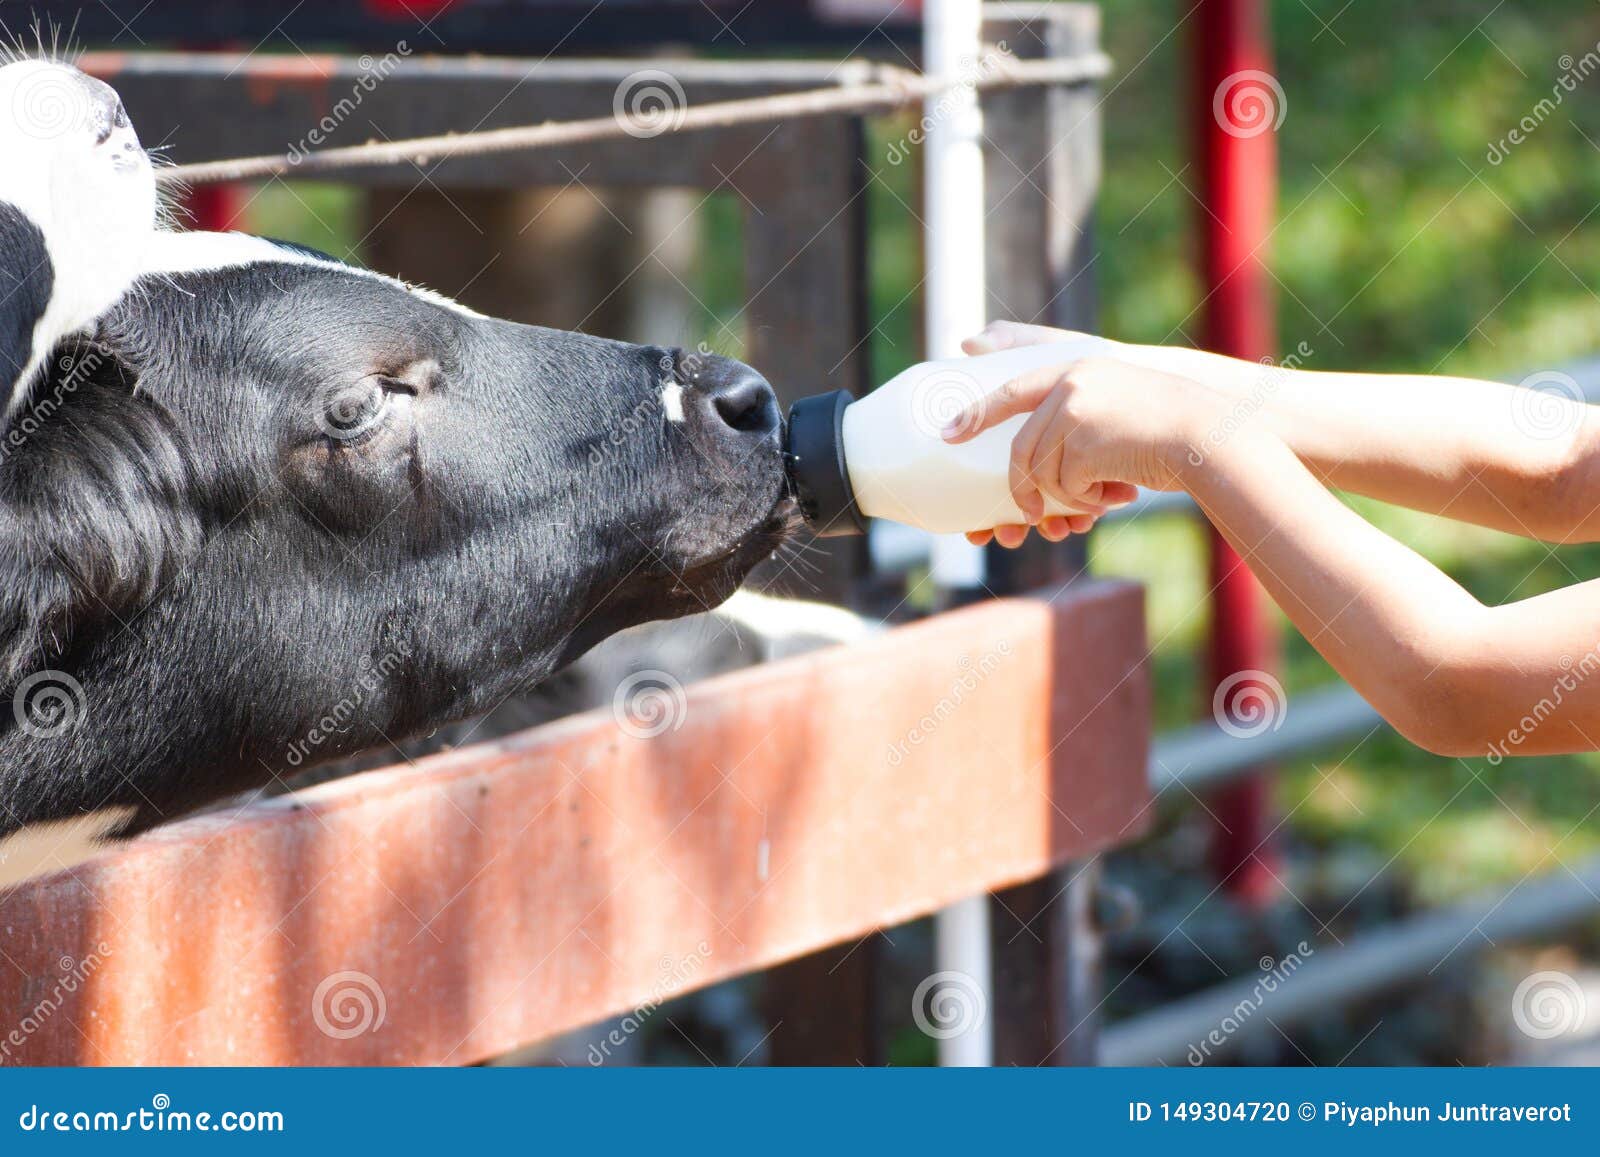 Baby Cow Feeding On Milk Bottle By Hand Boy Stock Photo ...